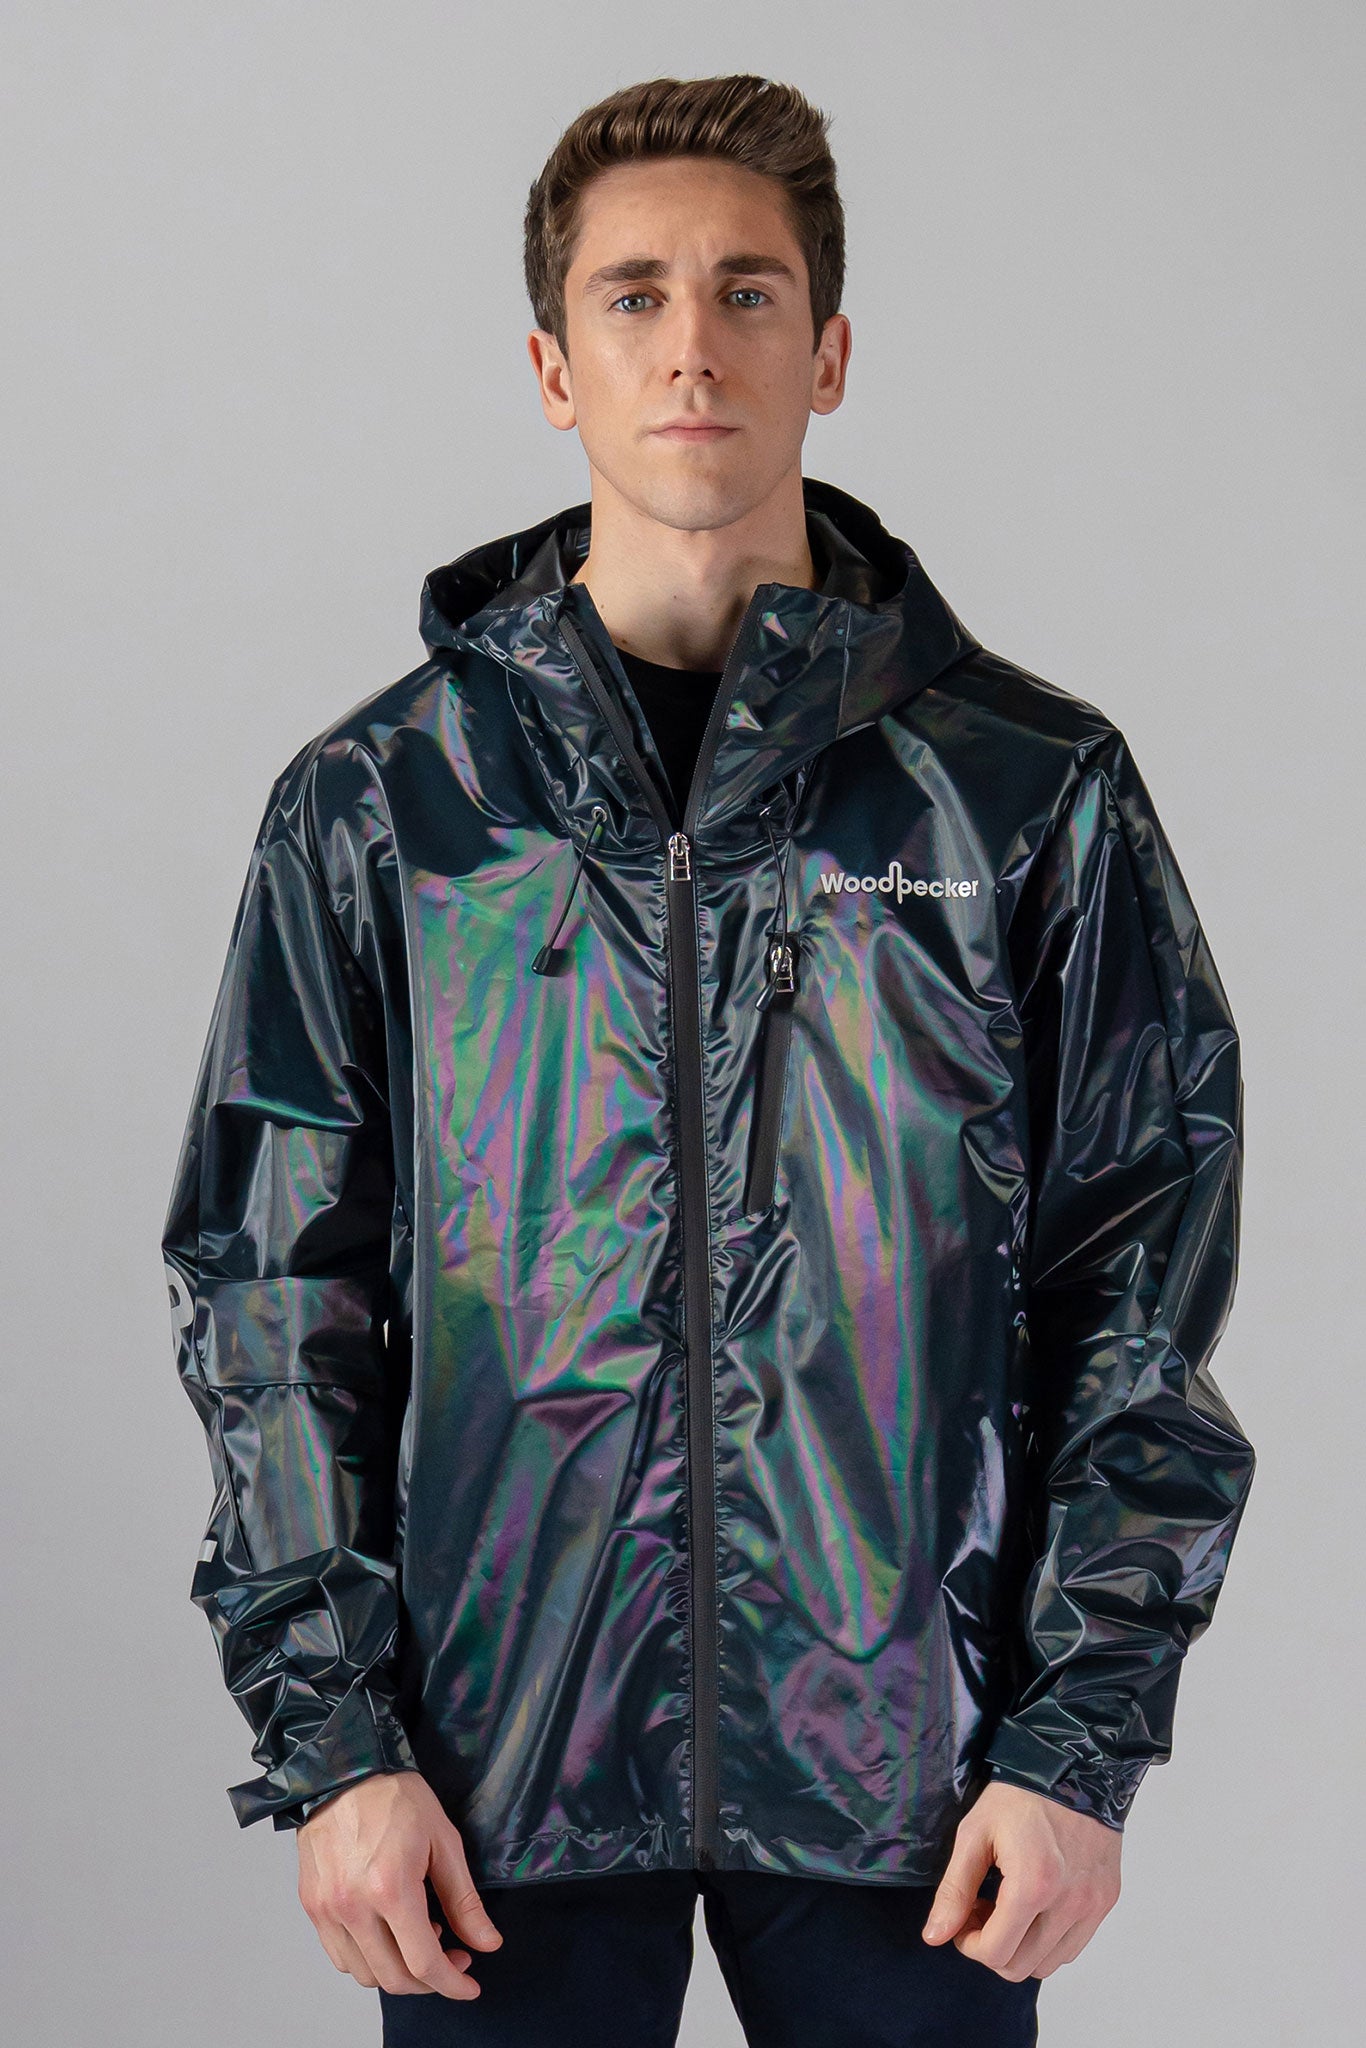 Woodpecker Men's Wind Shell coat. High-end Canadian designer activewear coat for men in 